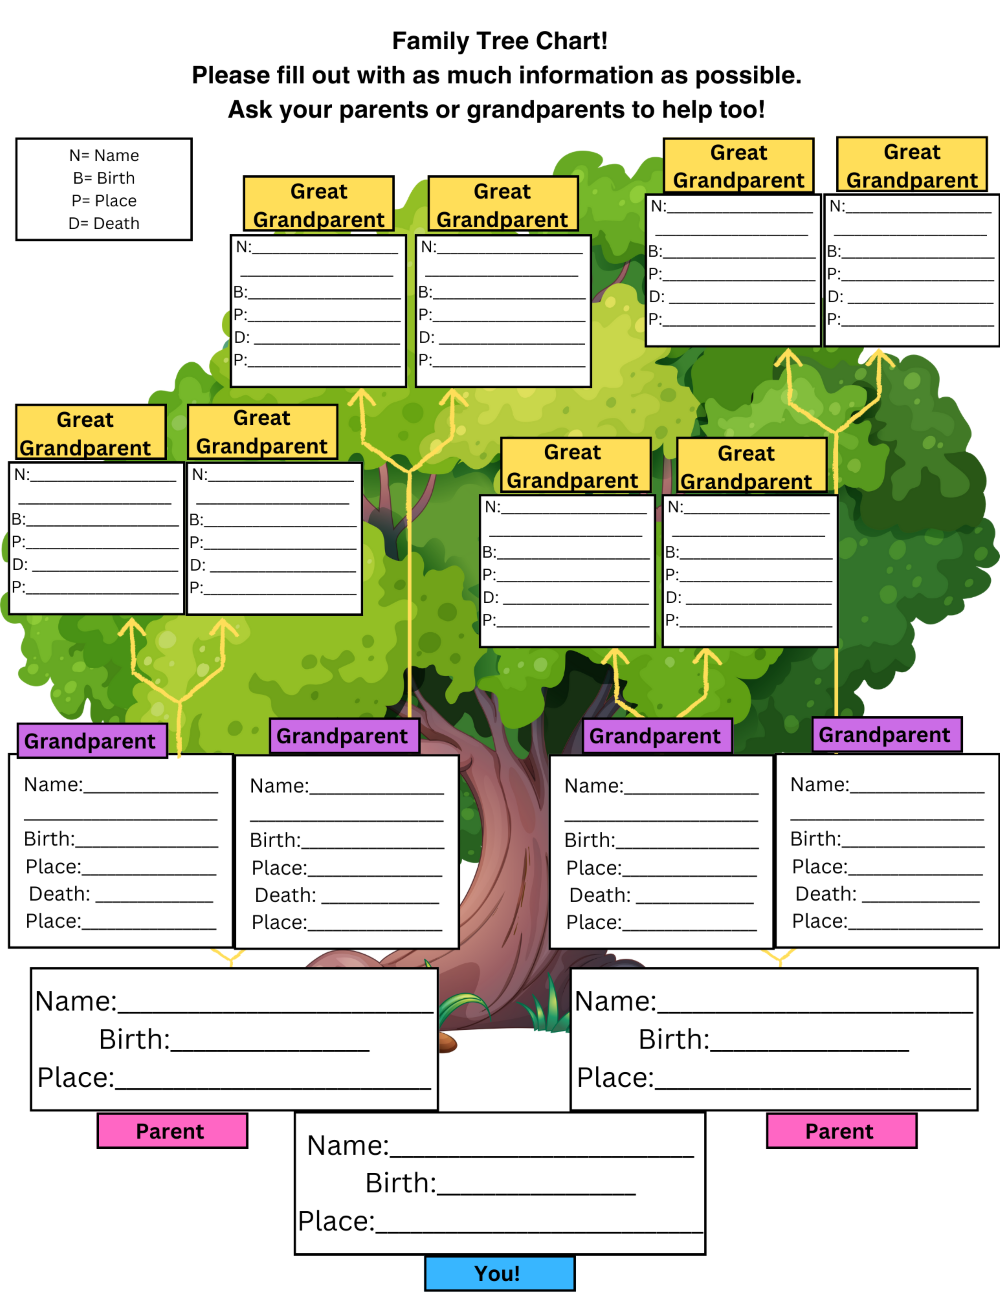 Climbing Your Family Tree Family Tree Chart – Norfolk Library